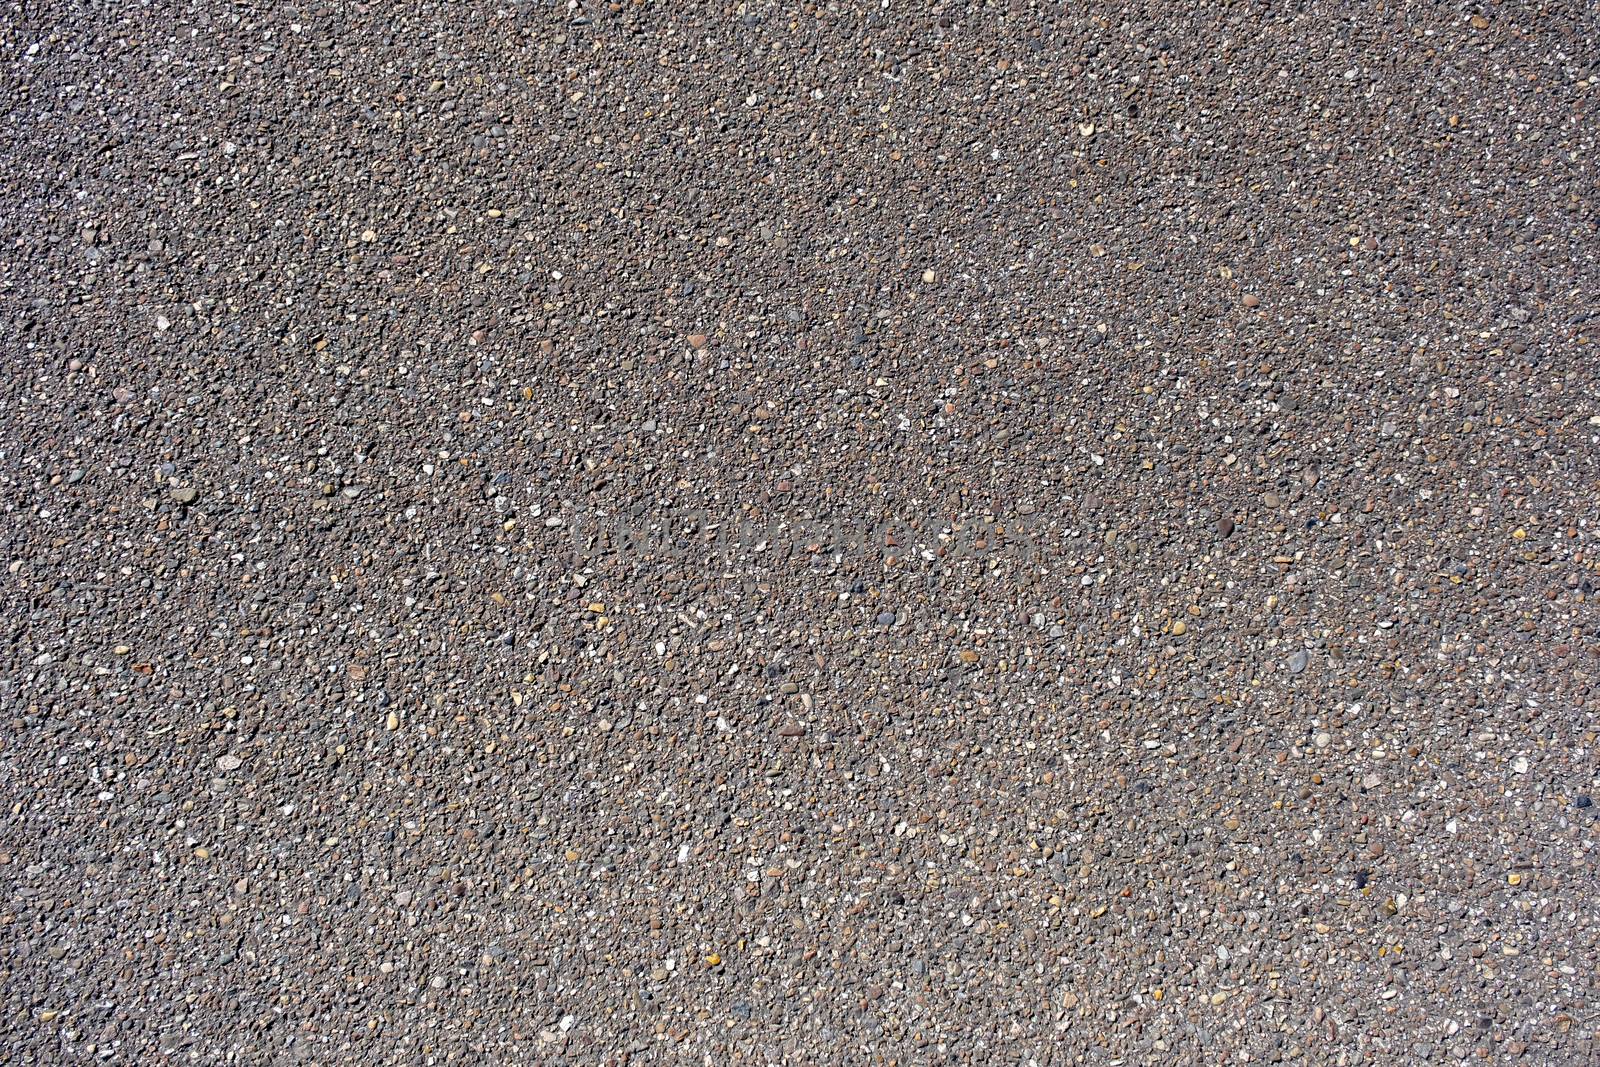 Surface grunge rough of asphalt, Seamless tarmac dark grey grain by Tjeerdkruse